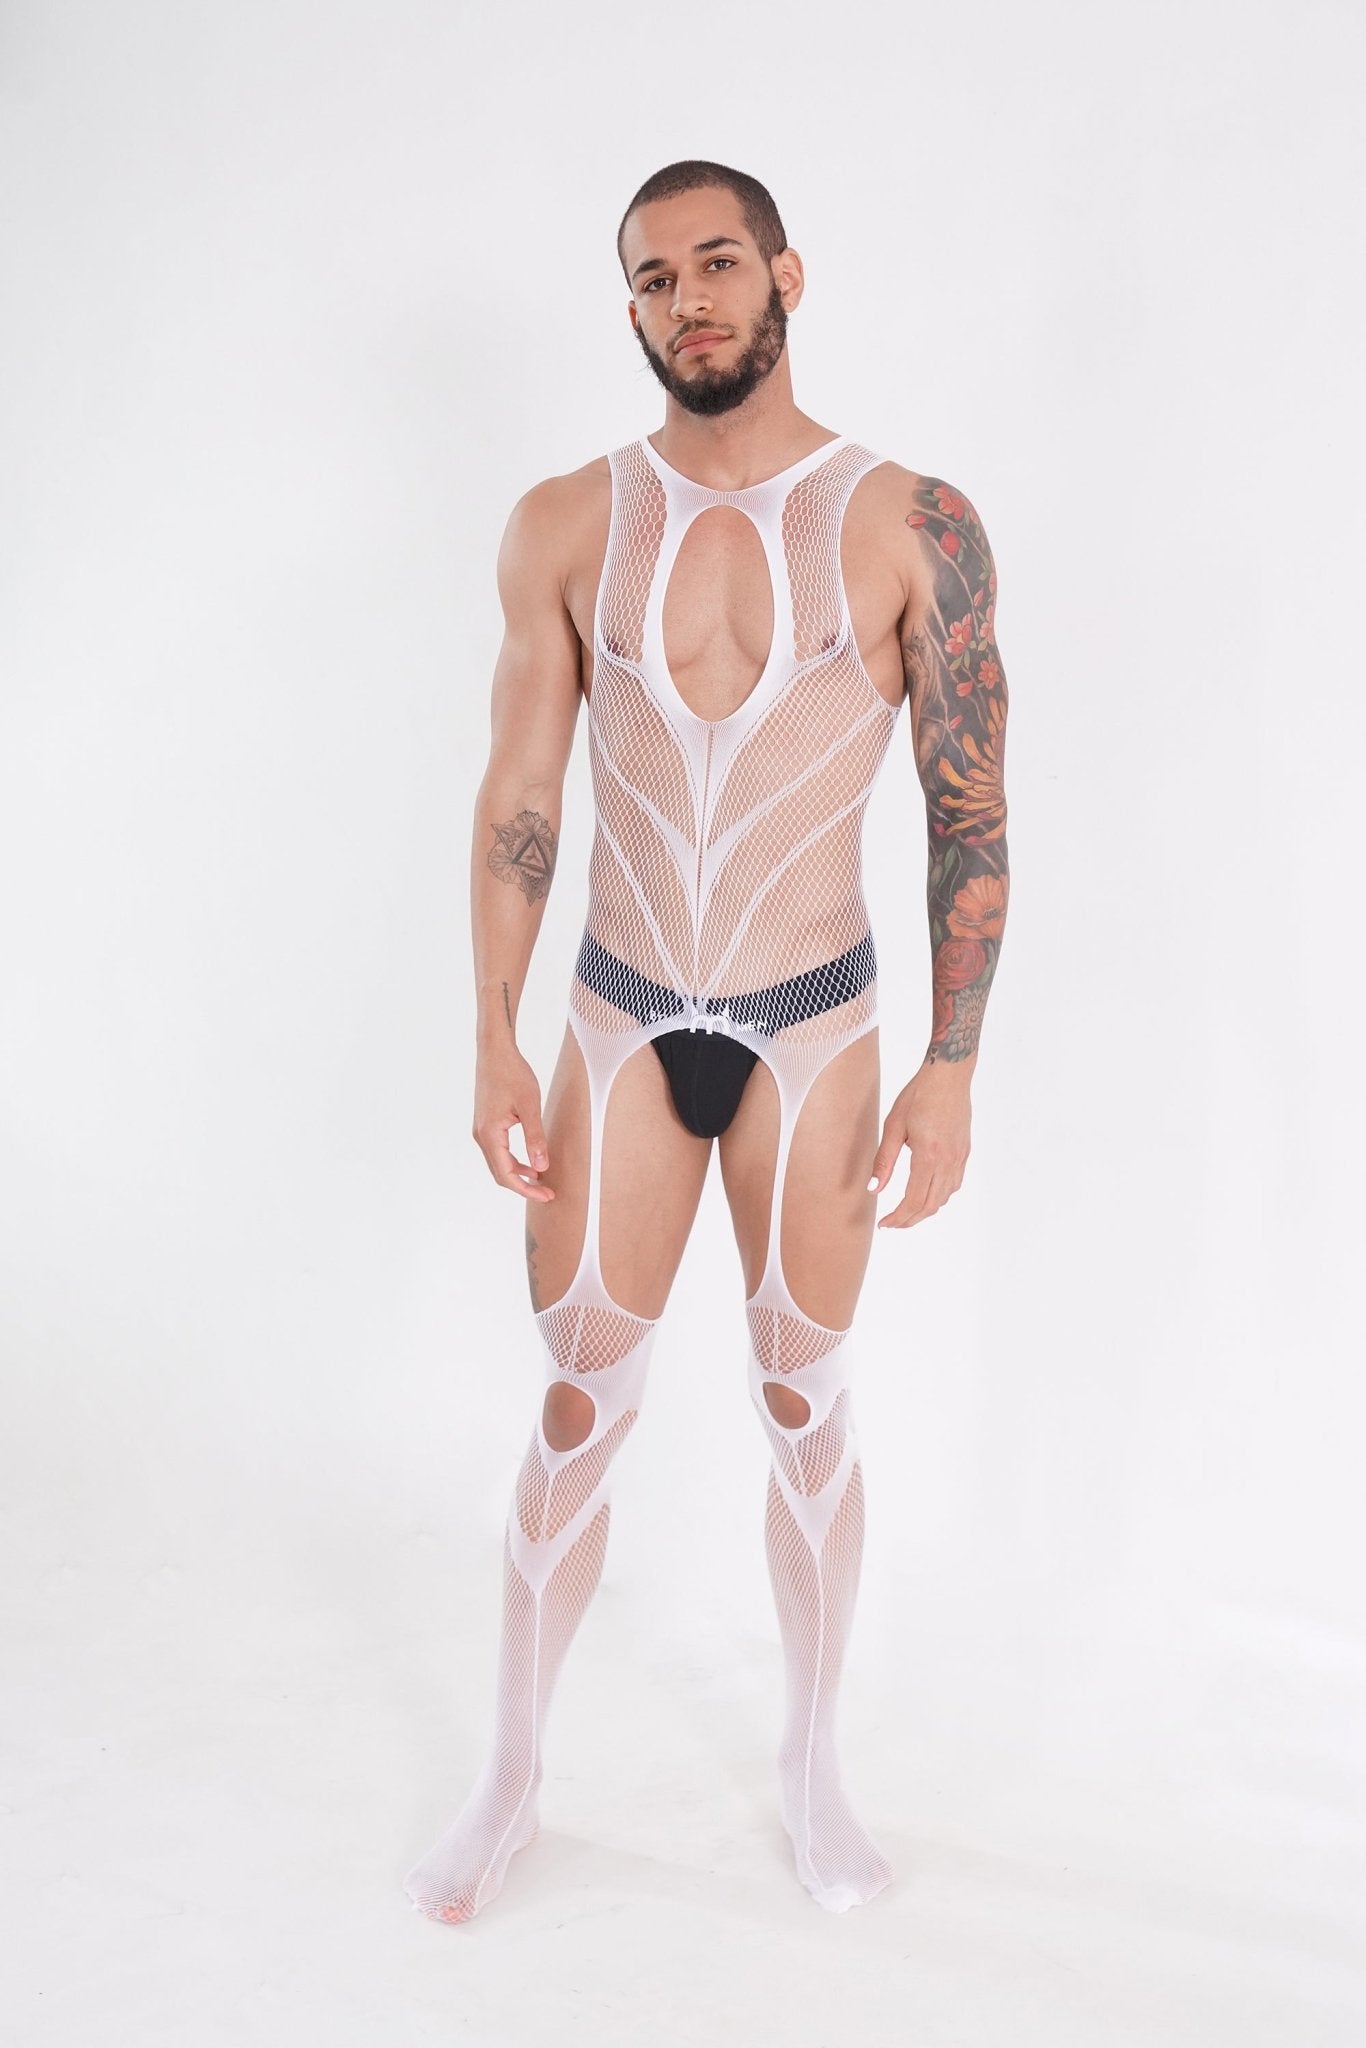 White Hollow Fishnet Bodysuit, body suit, bdsm bodysuit, lgbtq bodysuit, fetish bodysuitPink Hollow Fishnet Bodysuit, body suit, bdsm bodysuit, lgbtq bodysuit, fetish bodysuit